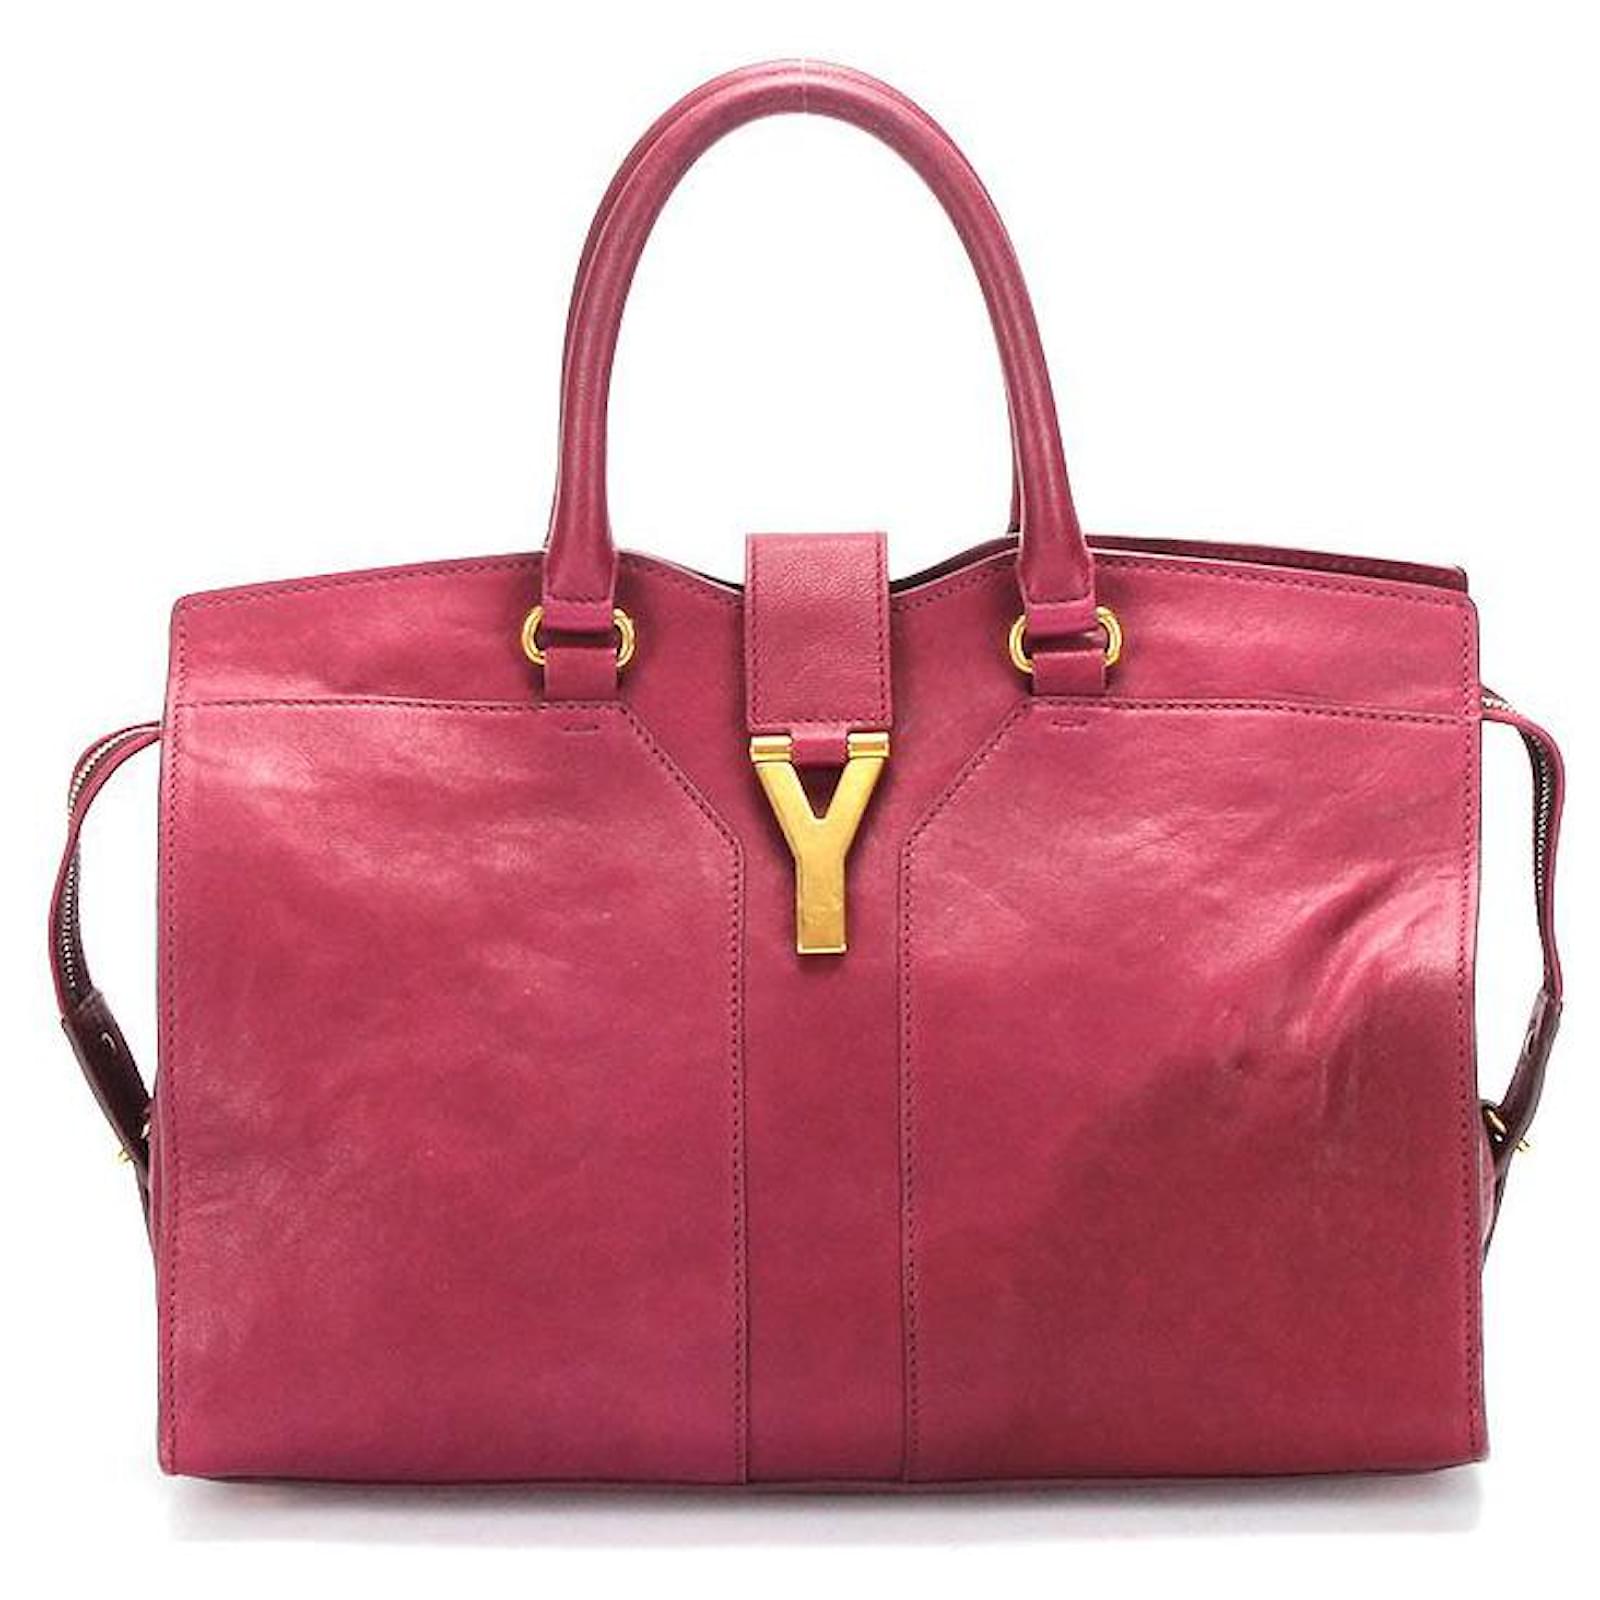 Yves Saint Laurent Laurent Cabas Y Line Hand Bag 279079 In red